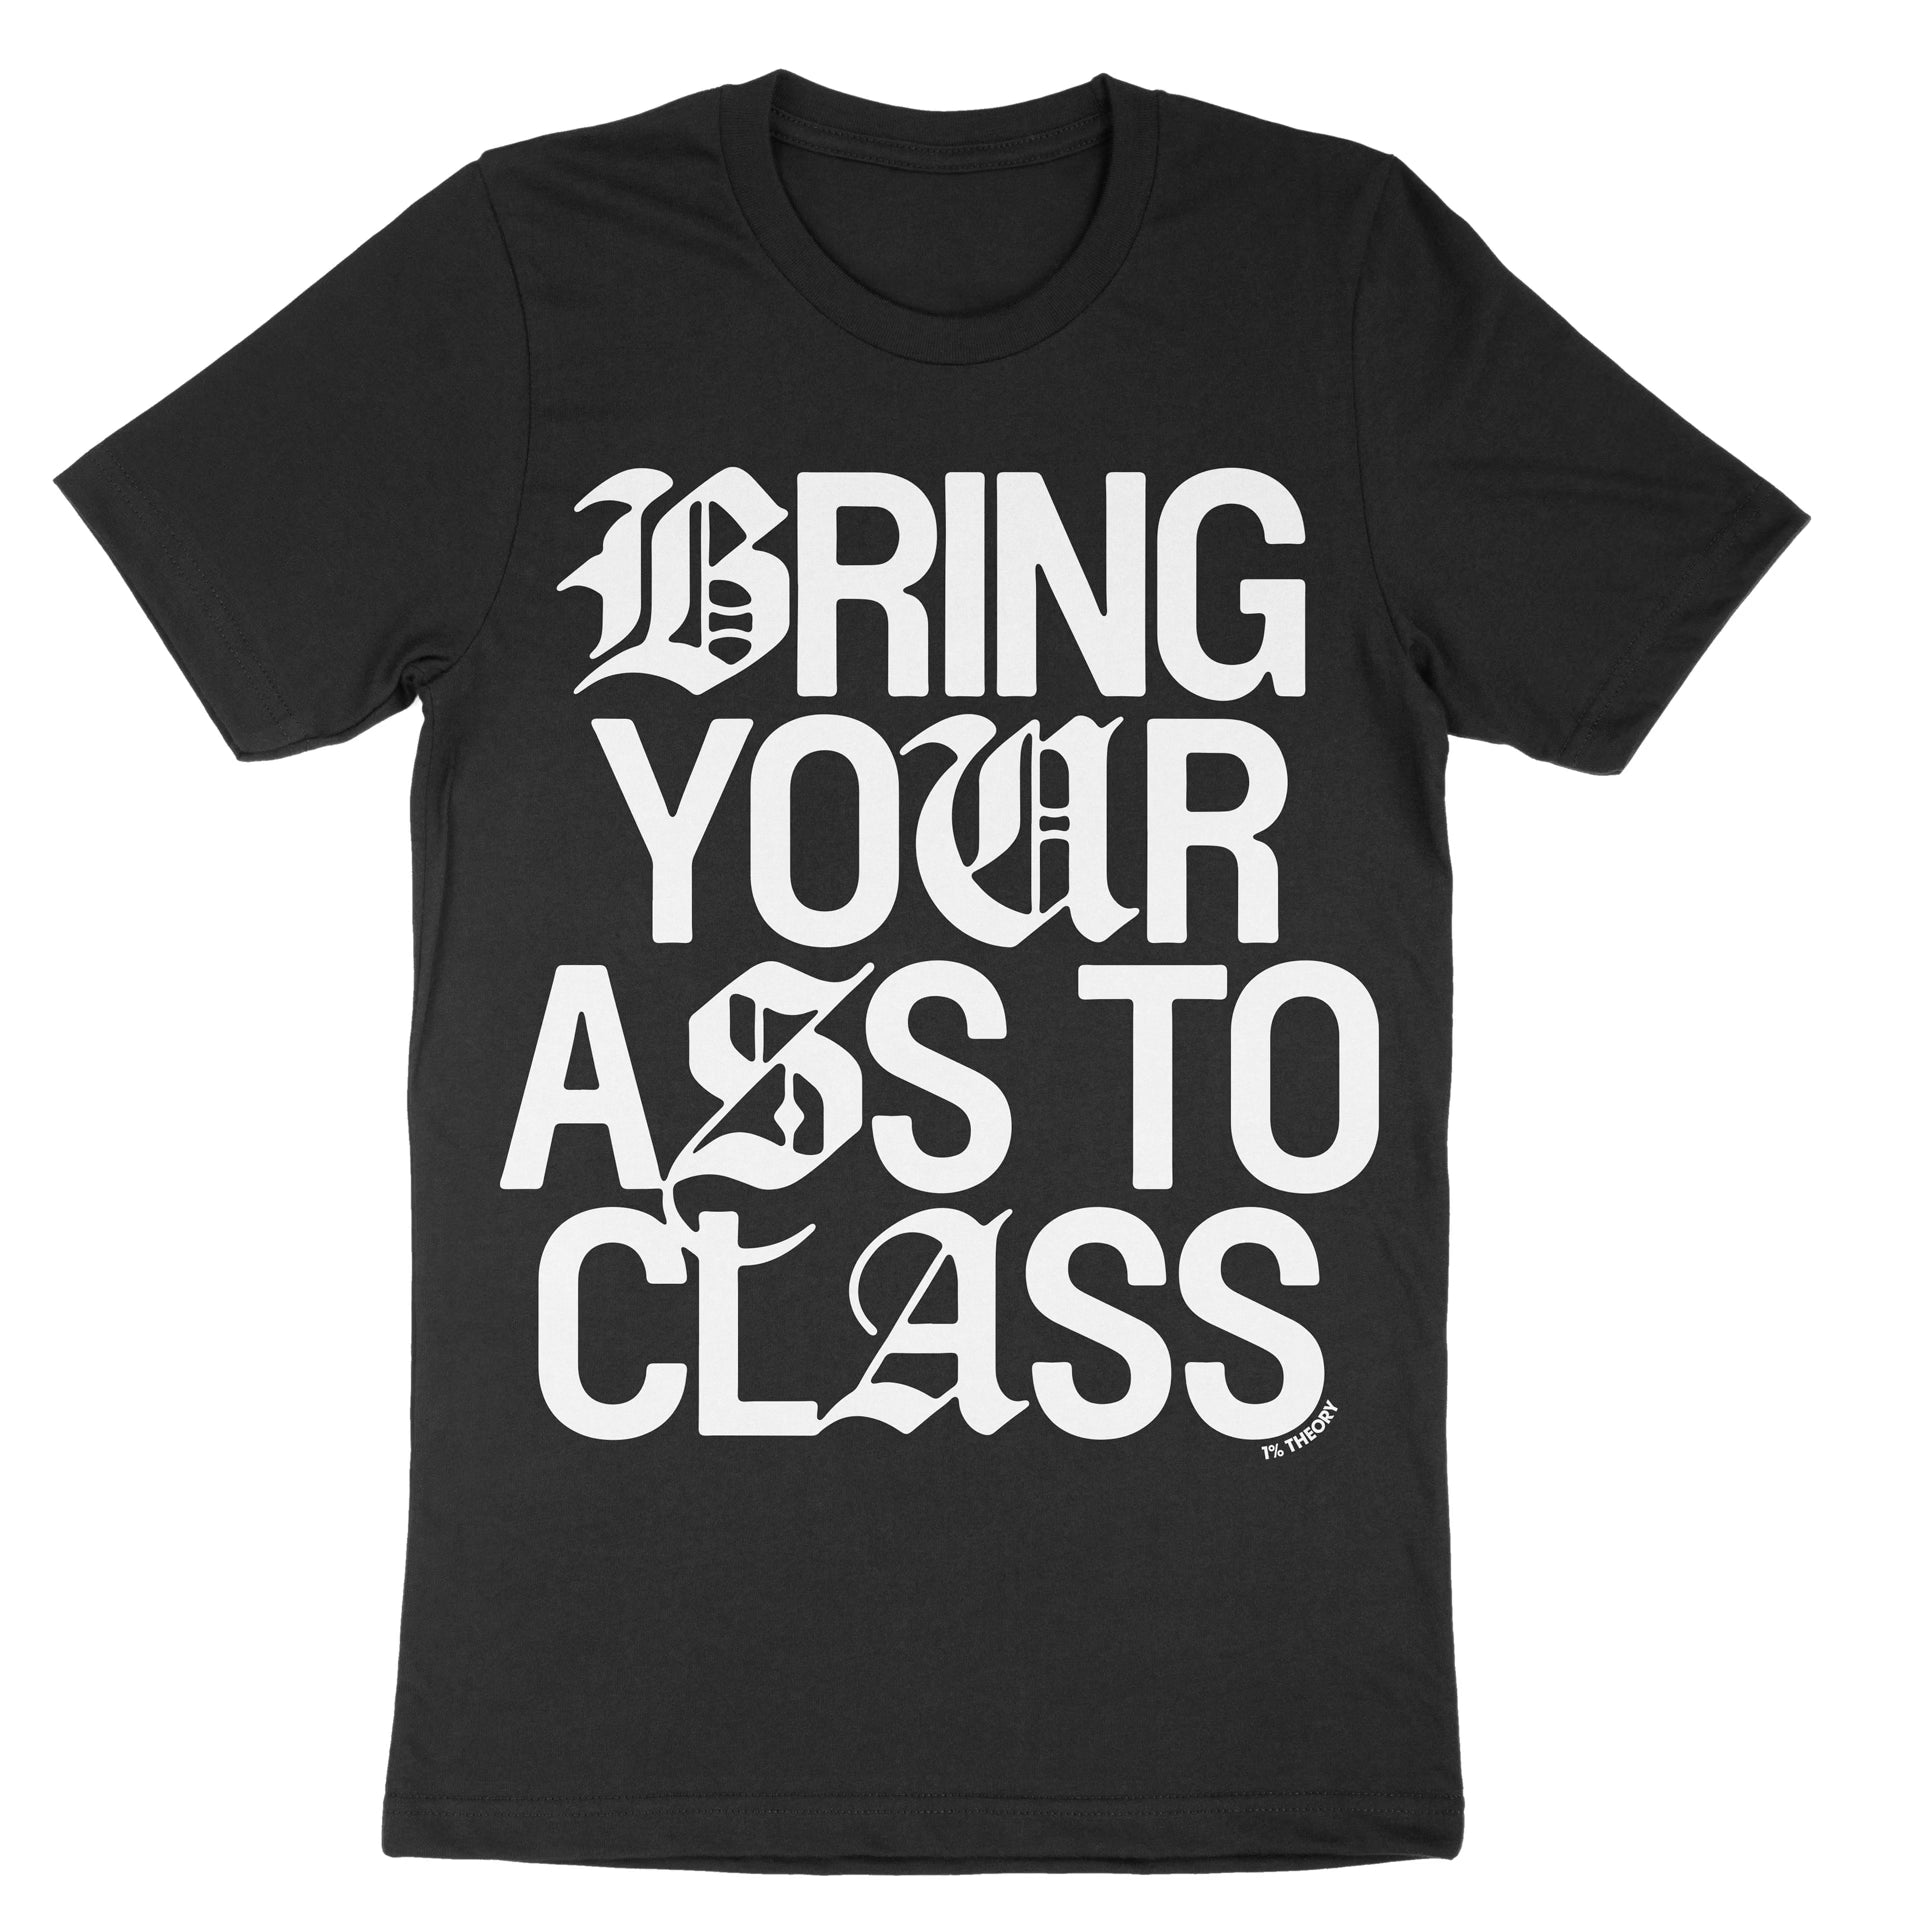 Bring Your Ass to Class- shirt